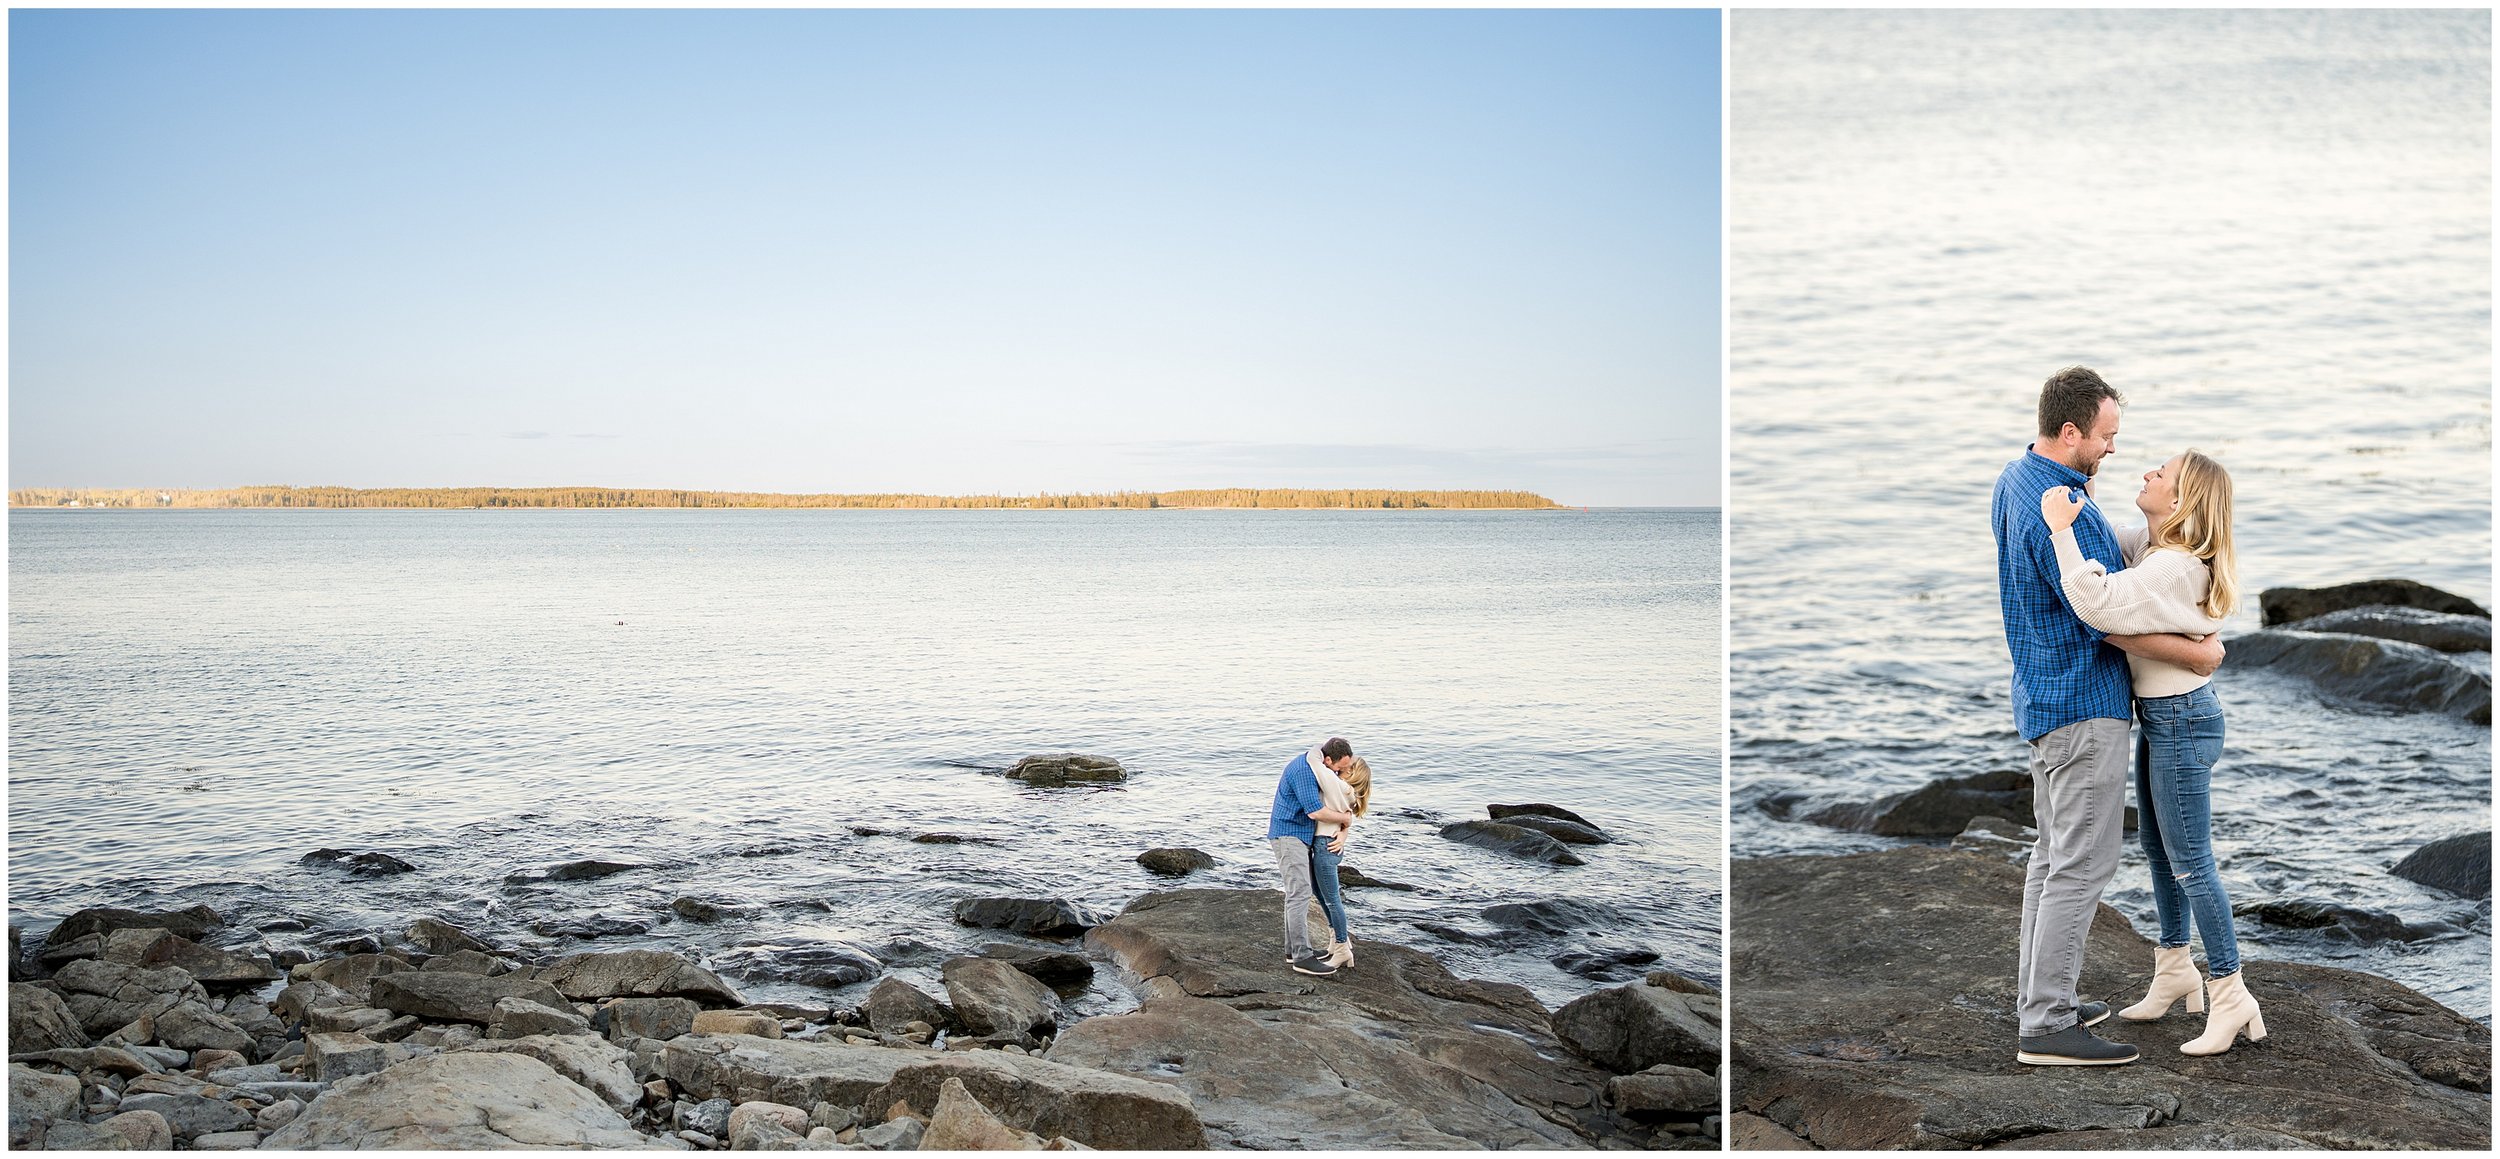 Acadia National Park Wedding Photographers, Bar Harbor Wedding Photographer, Two Adventurous Souls- 051423_0007.jpg